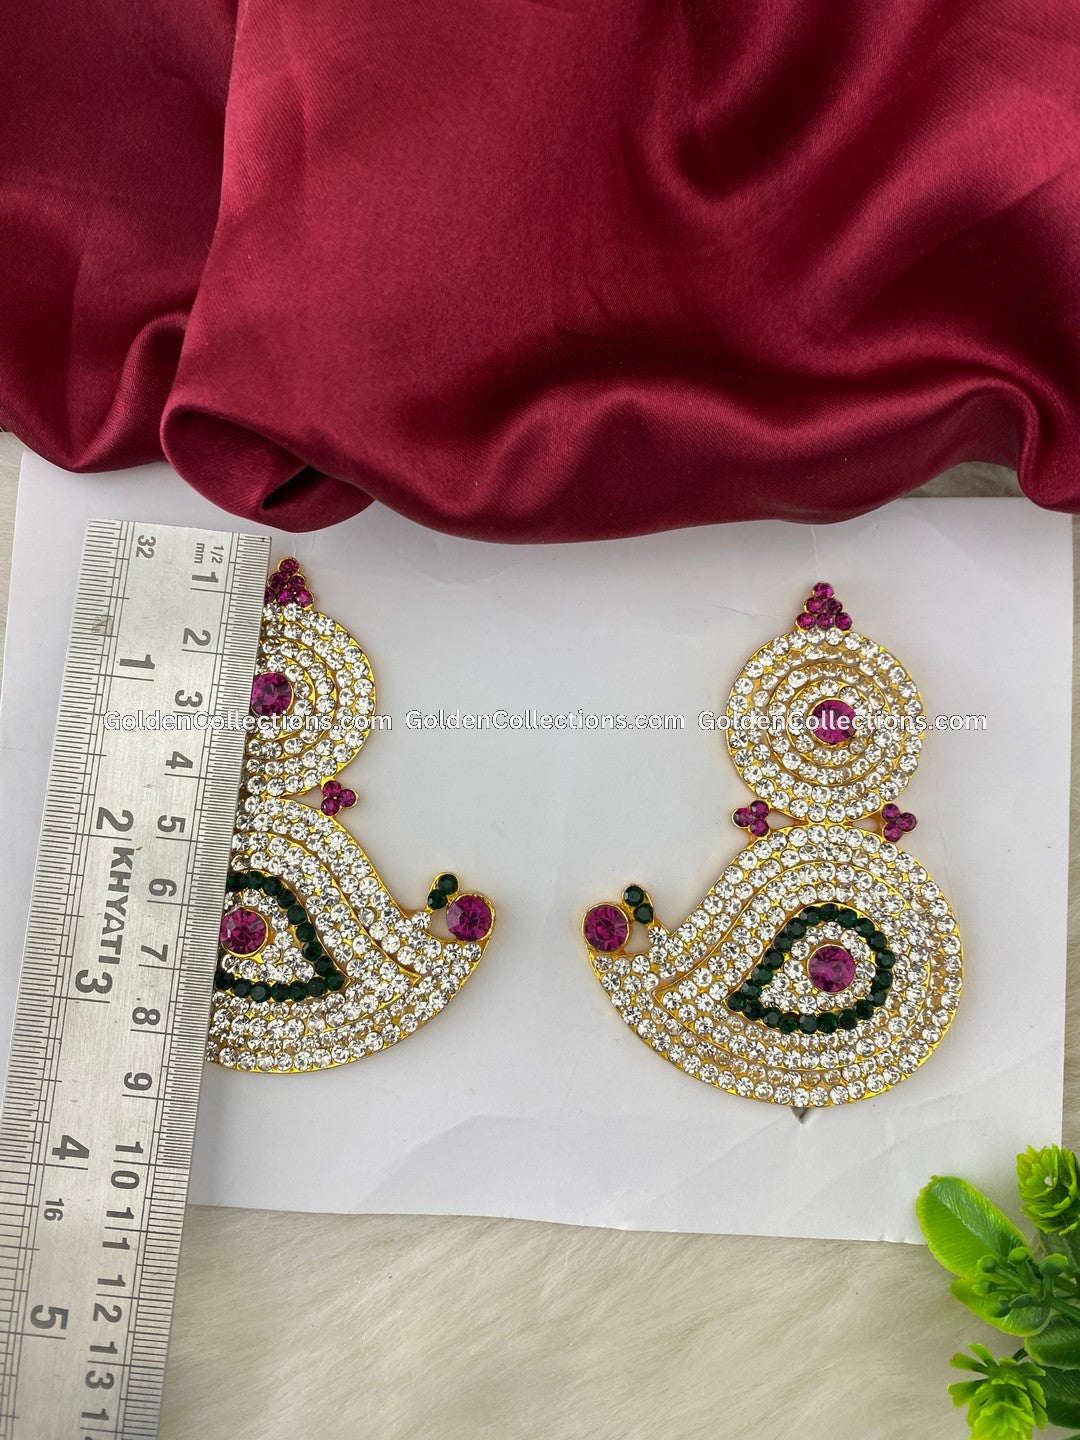 Deity God Goddess Earrings - Ornate Jewels - DGE-143 2